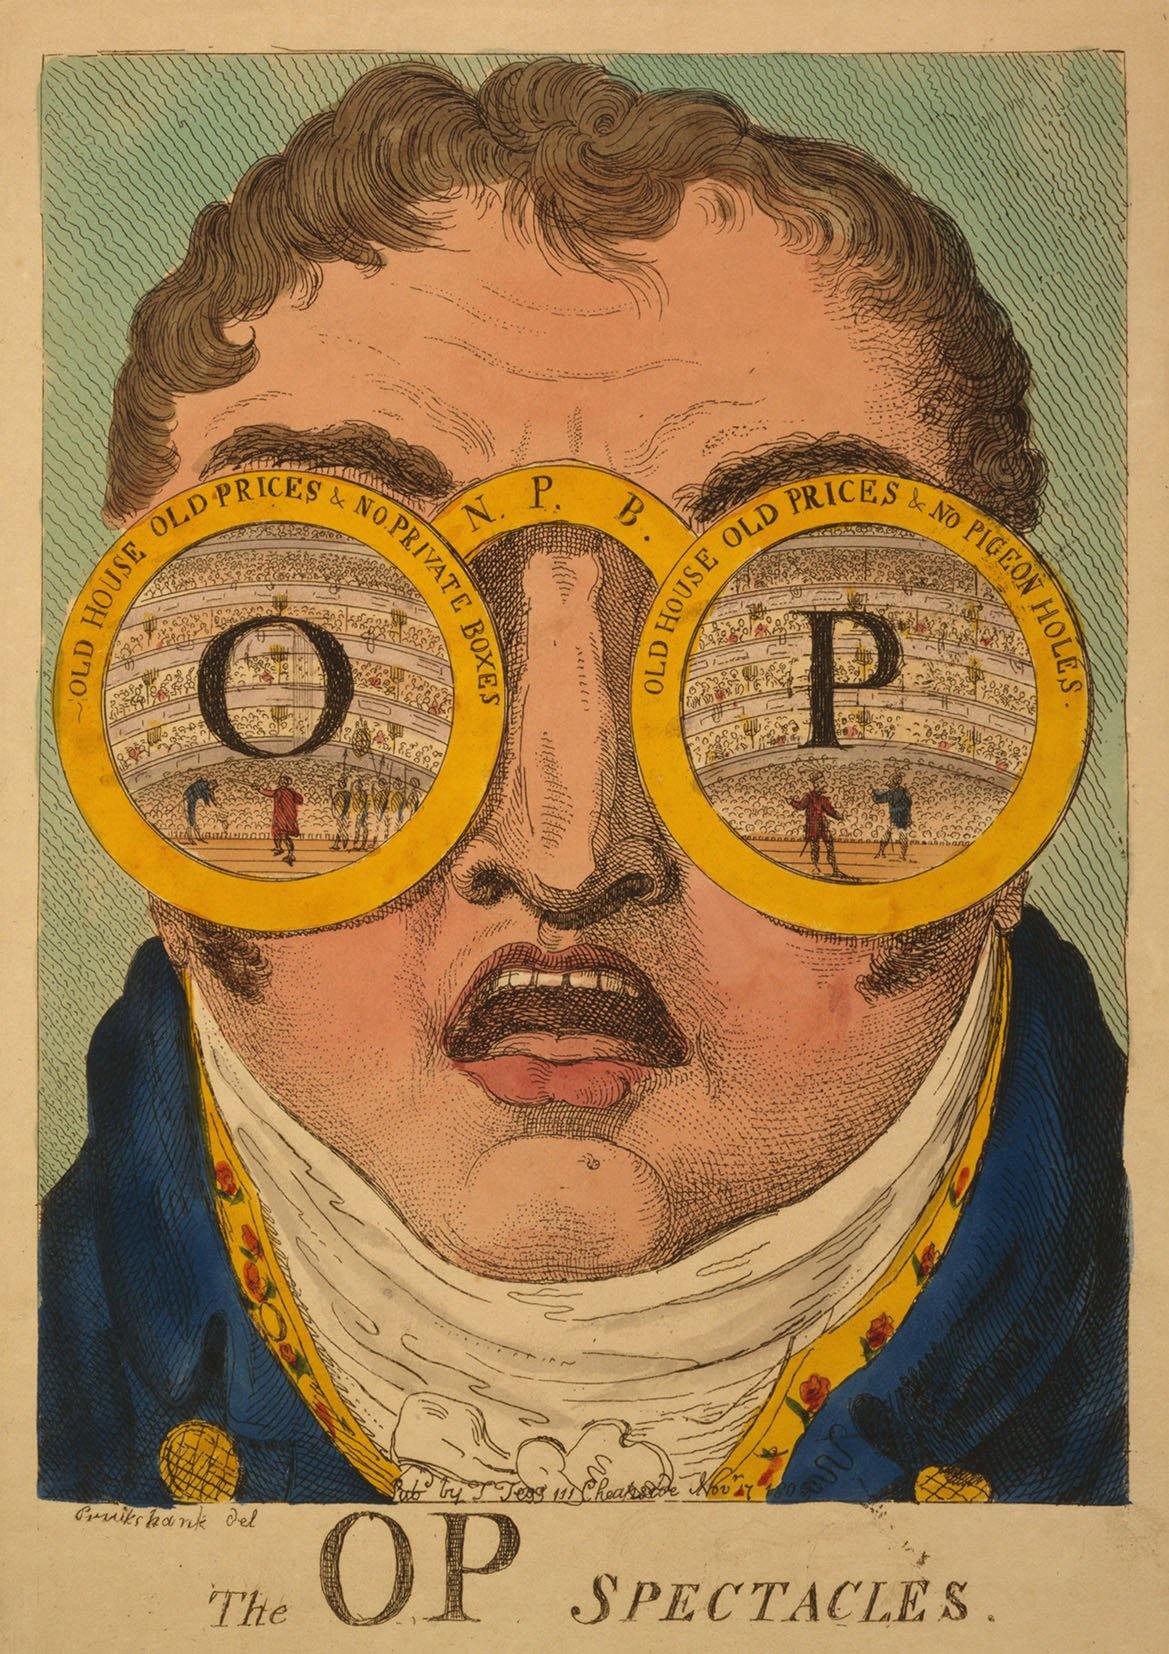 SPECTACLES ART PRINT: Vintage Op Glasses Advert - Pimlico Prints